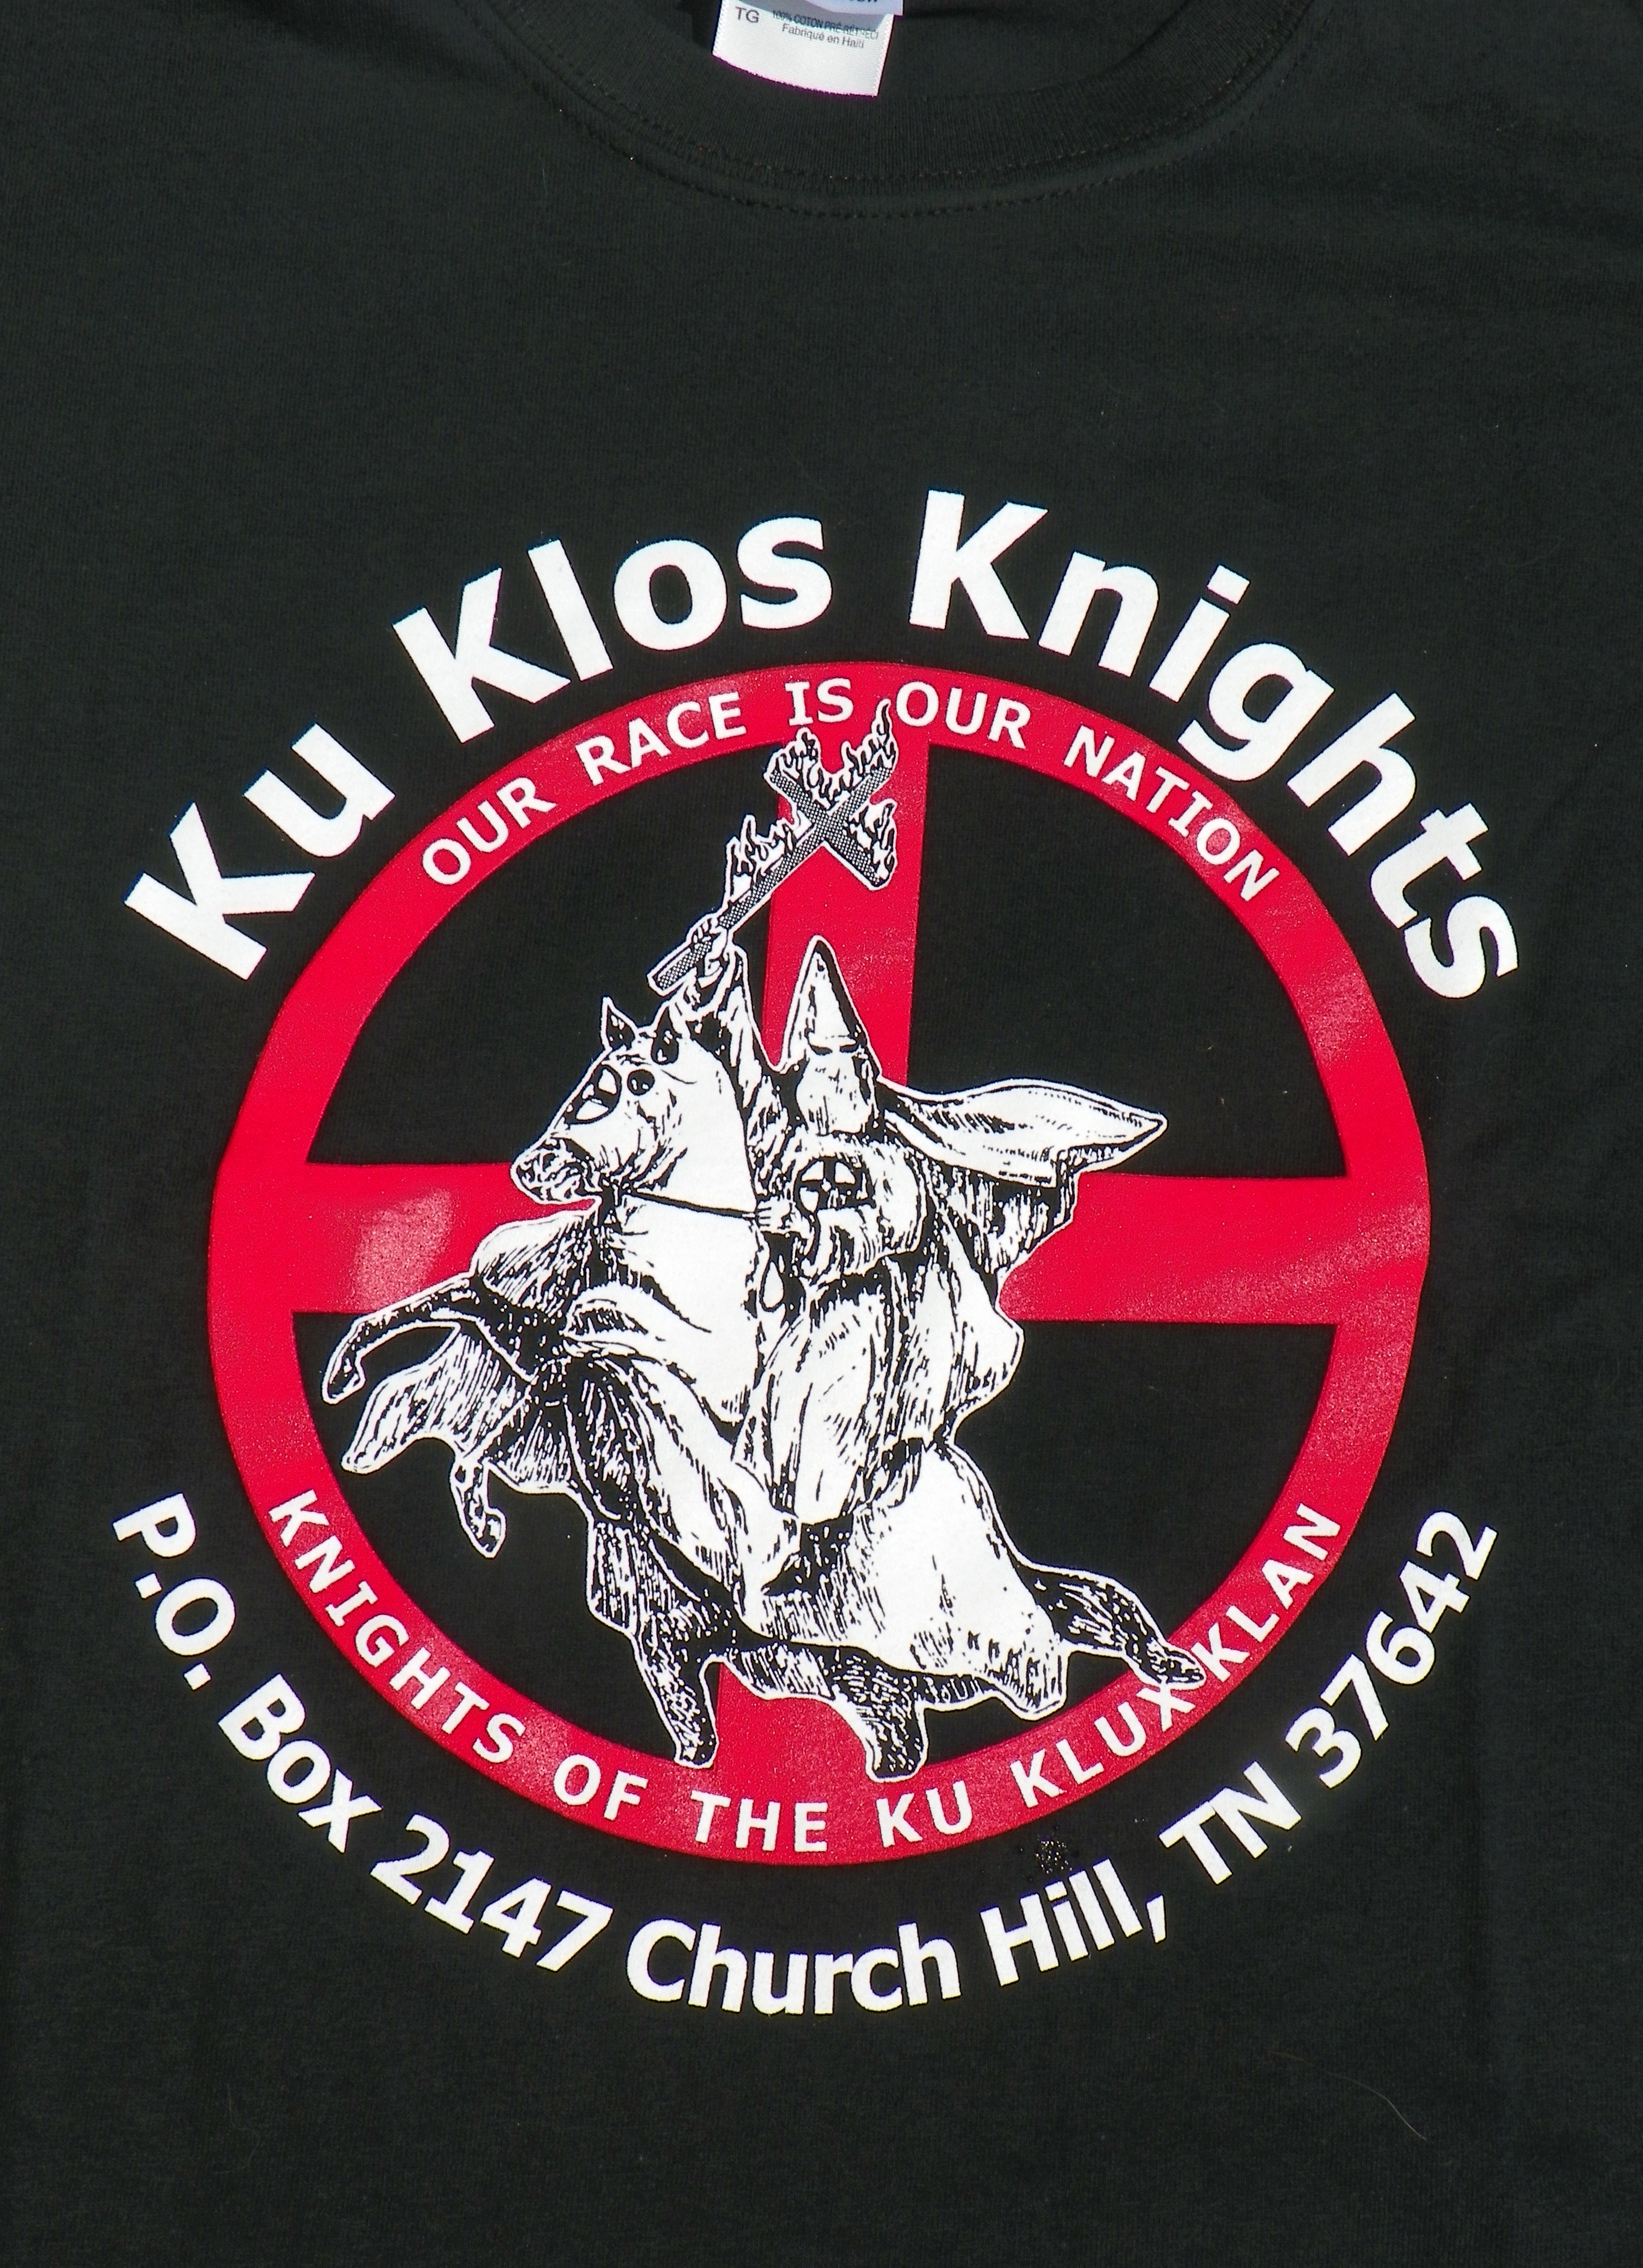 Ku Klos Knights